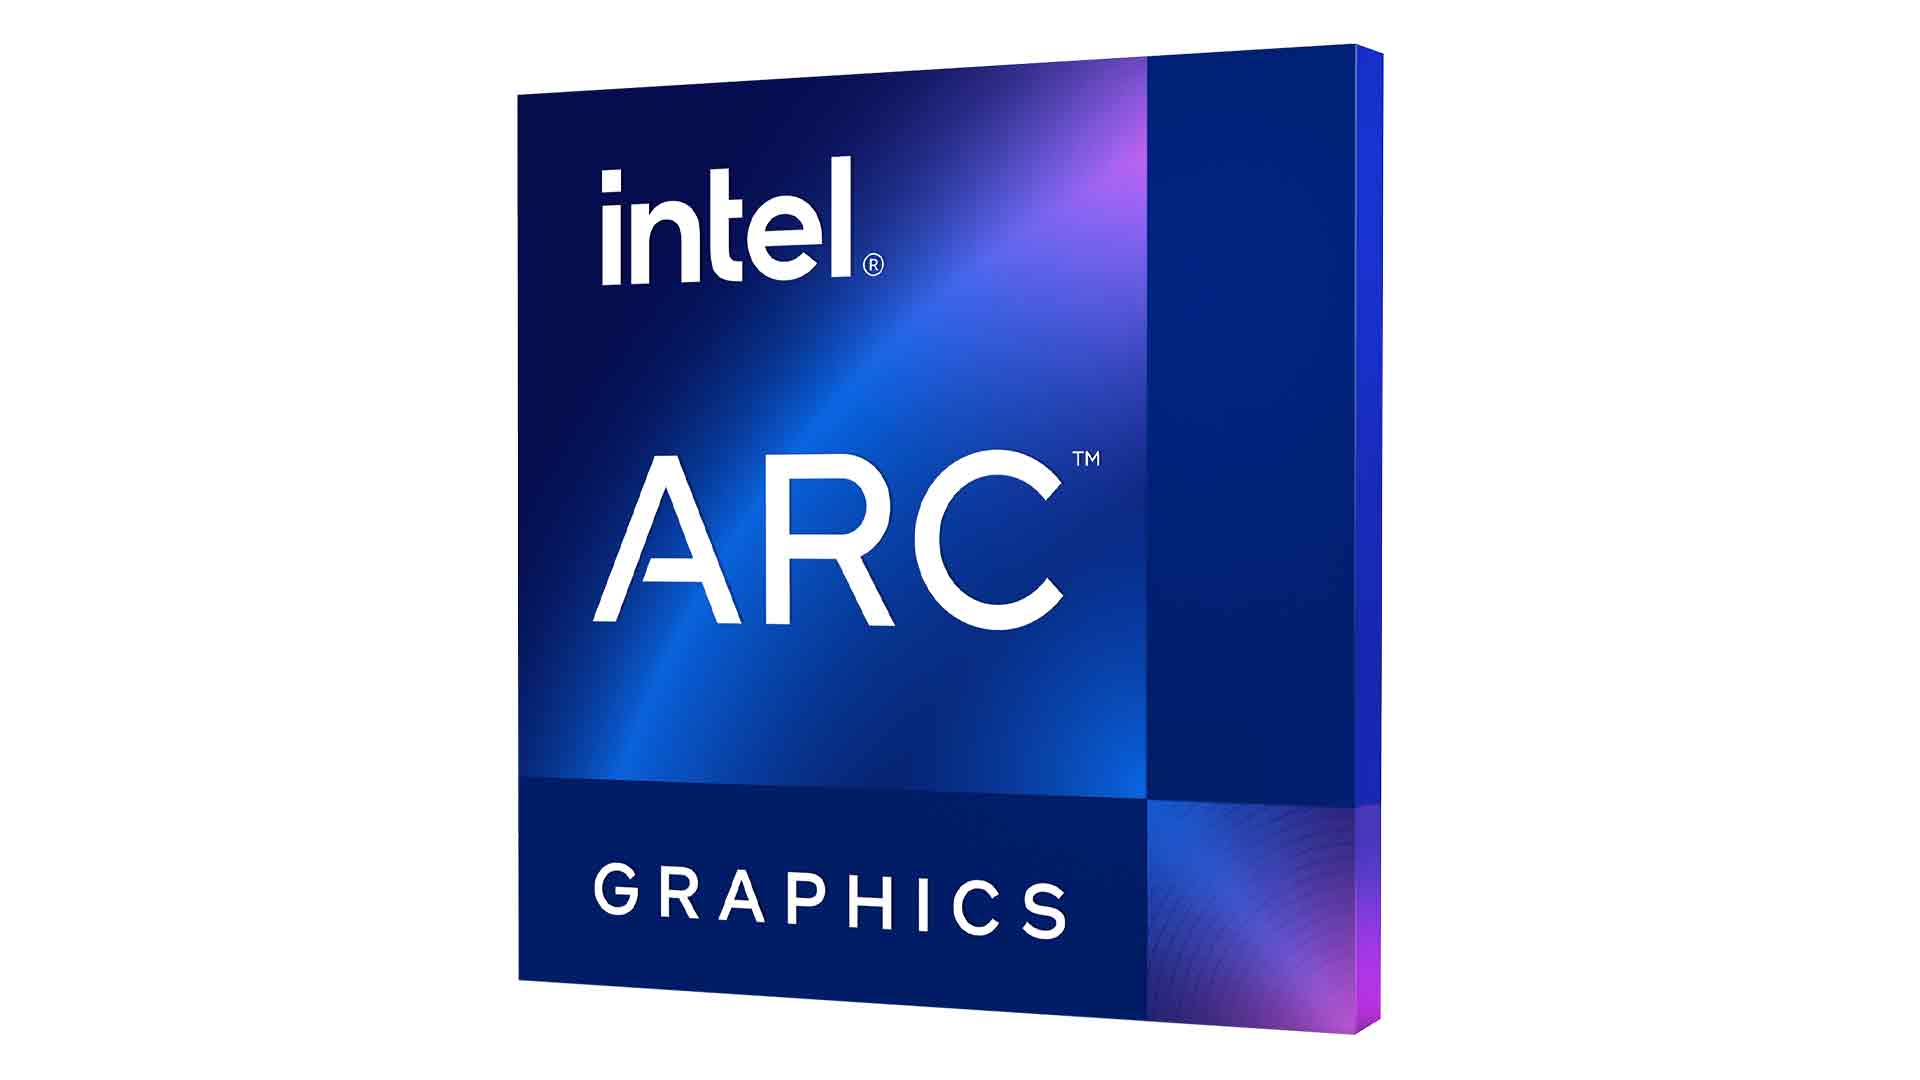 Intel arc tm. Intel Arc a770. Intel Arc a750. Intel Arc logo. Intel Arc a380.